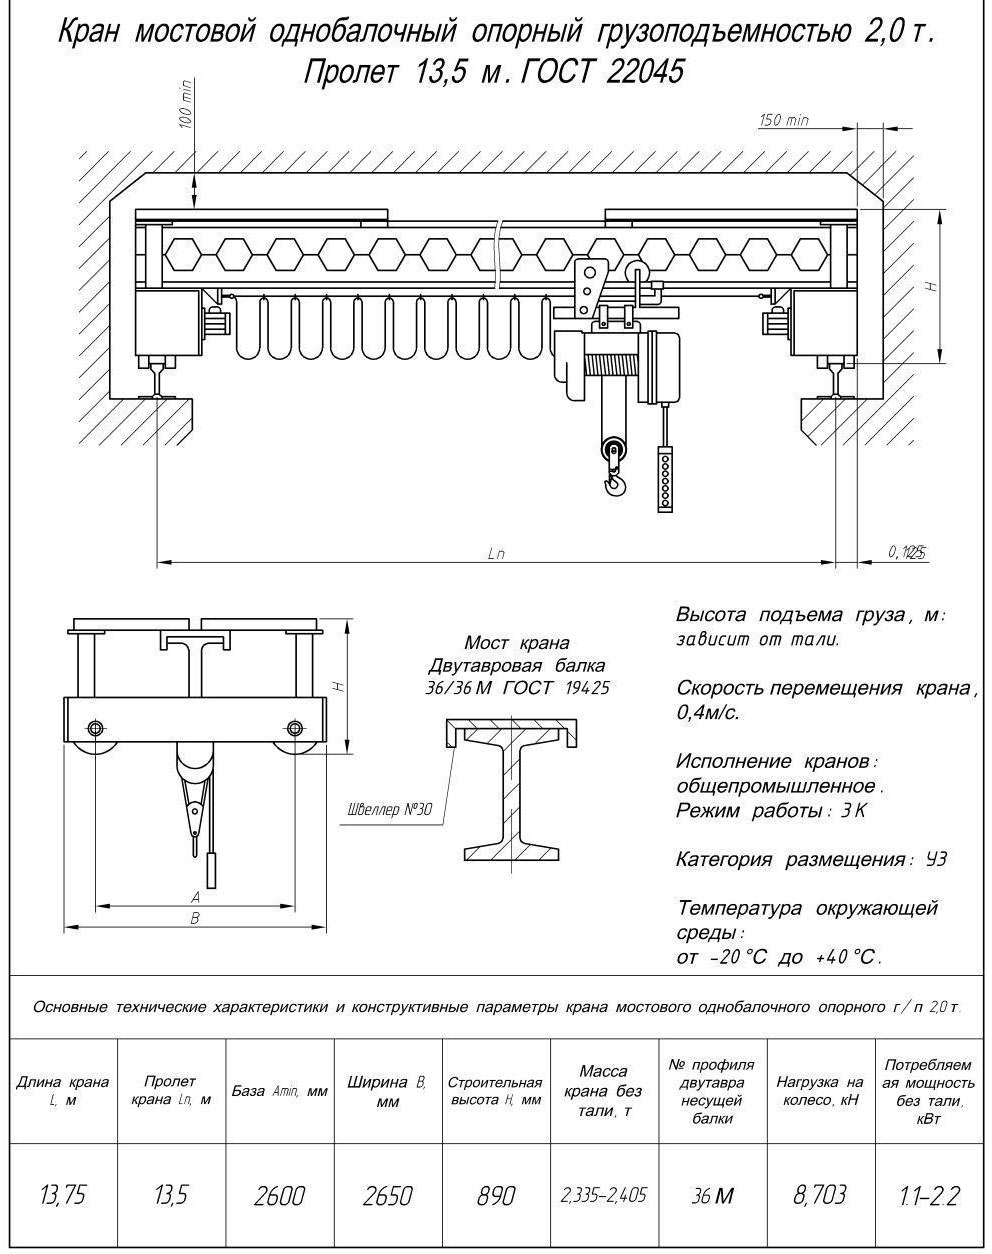 Чертеж и характеристики крана мостового электрического однобалочного опорного 2 т пролет 13,5 м